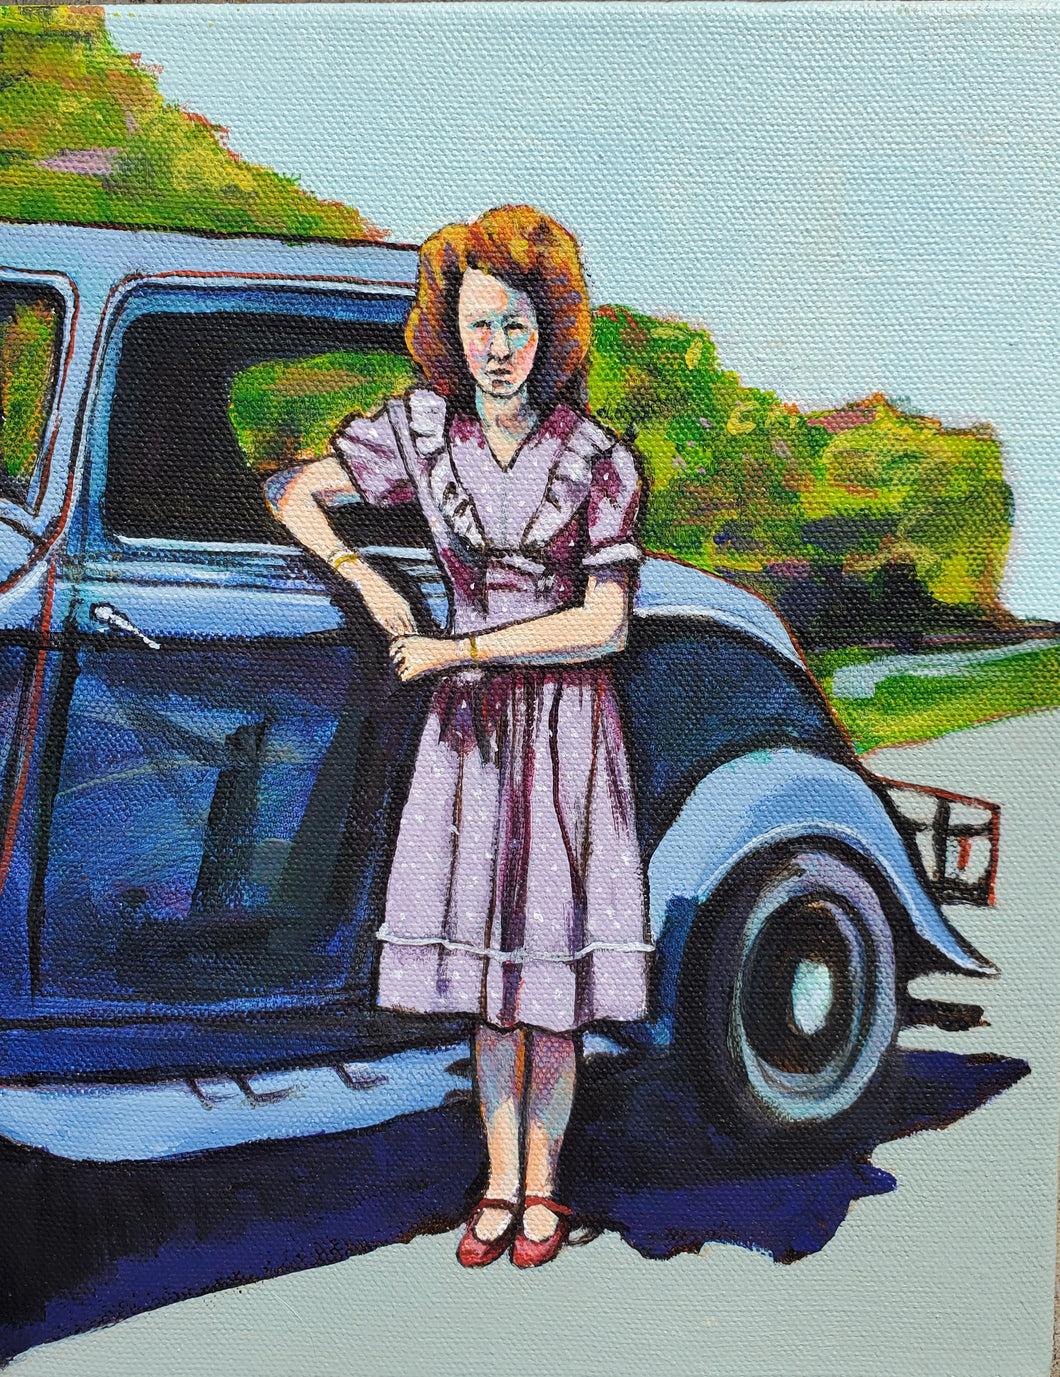 sarah maynard - “girl with car” (8 x 10”)